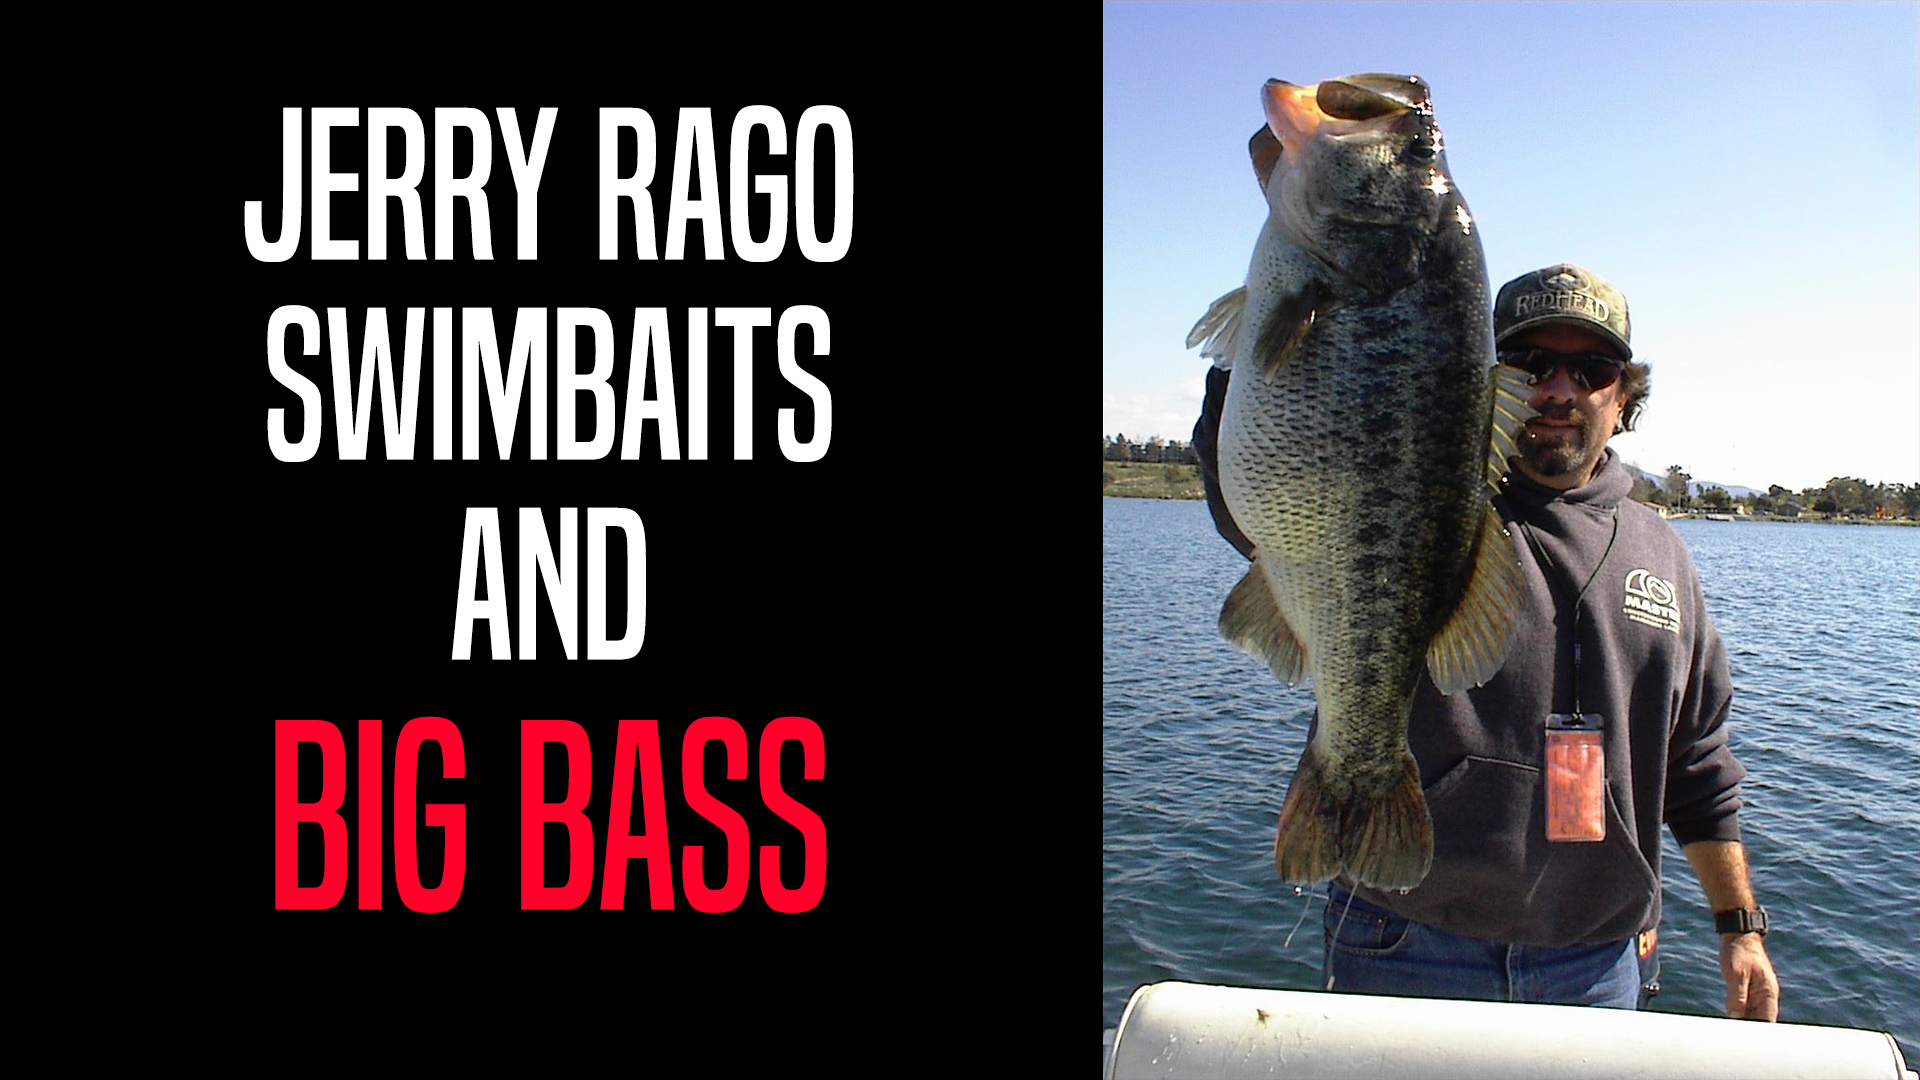 The Big Bass Podcast: Jerry Rago Swimbaits and BIG BASS